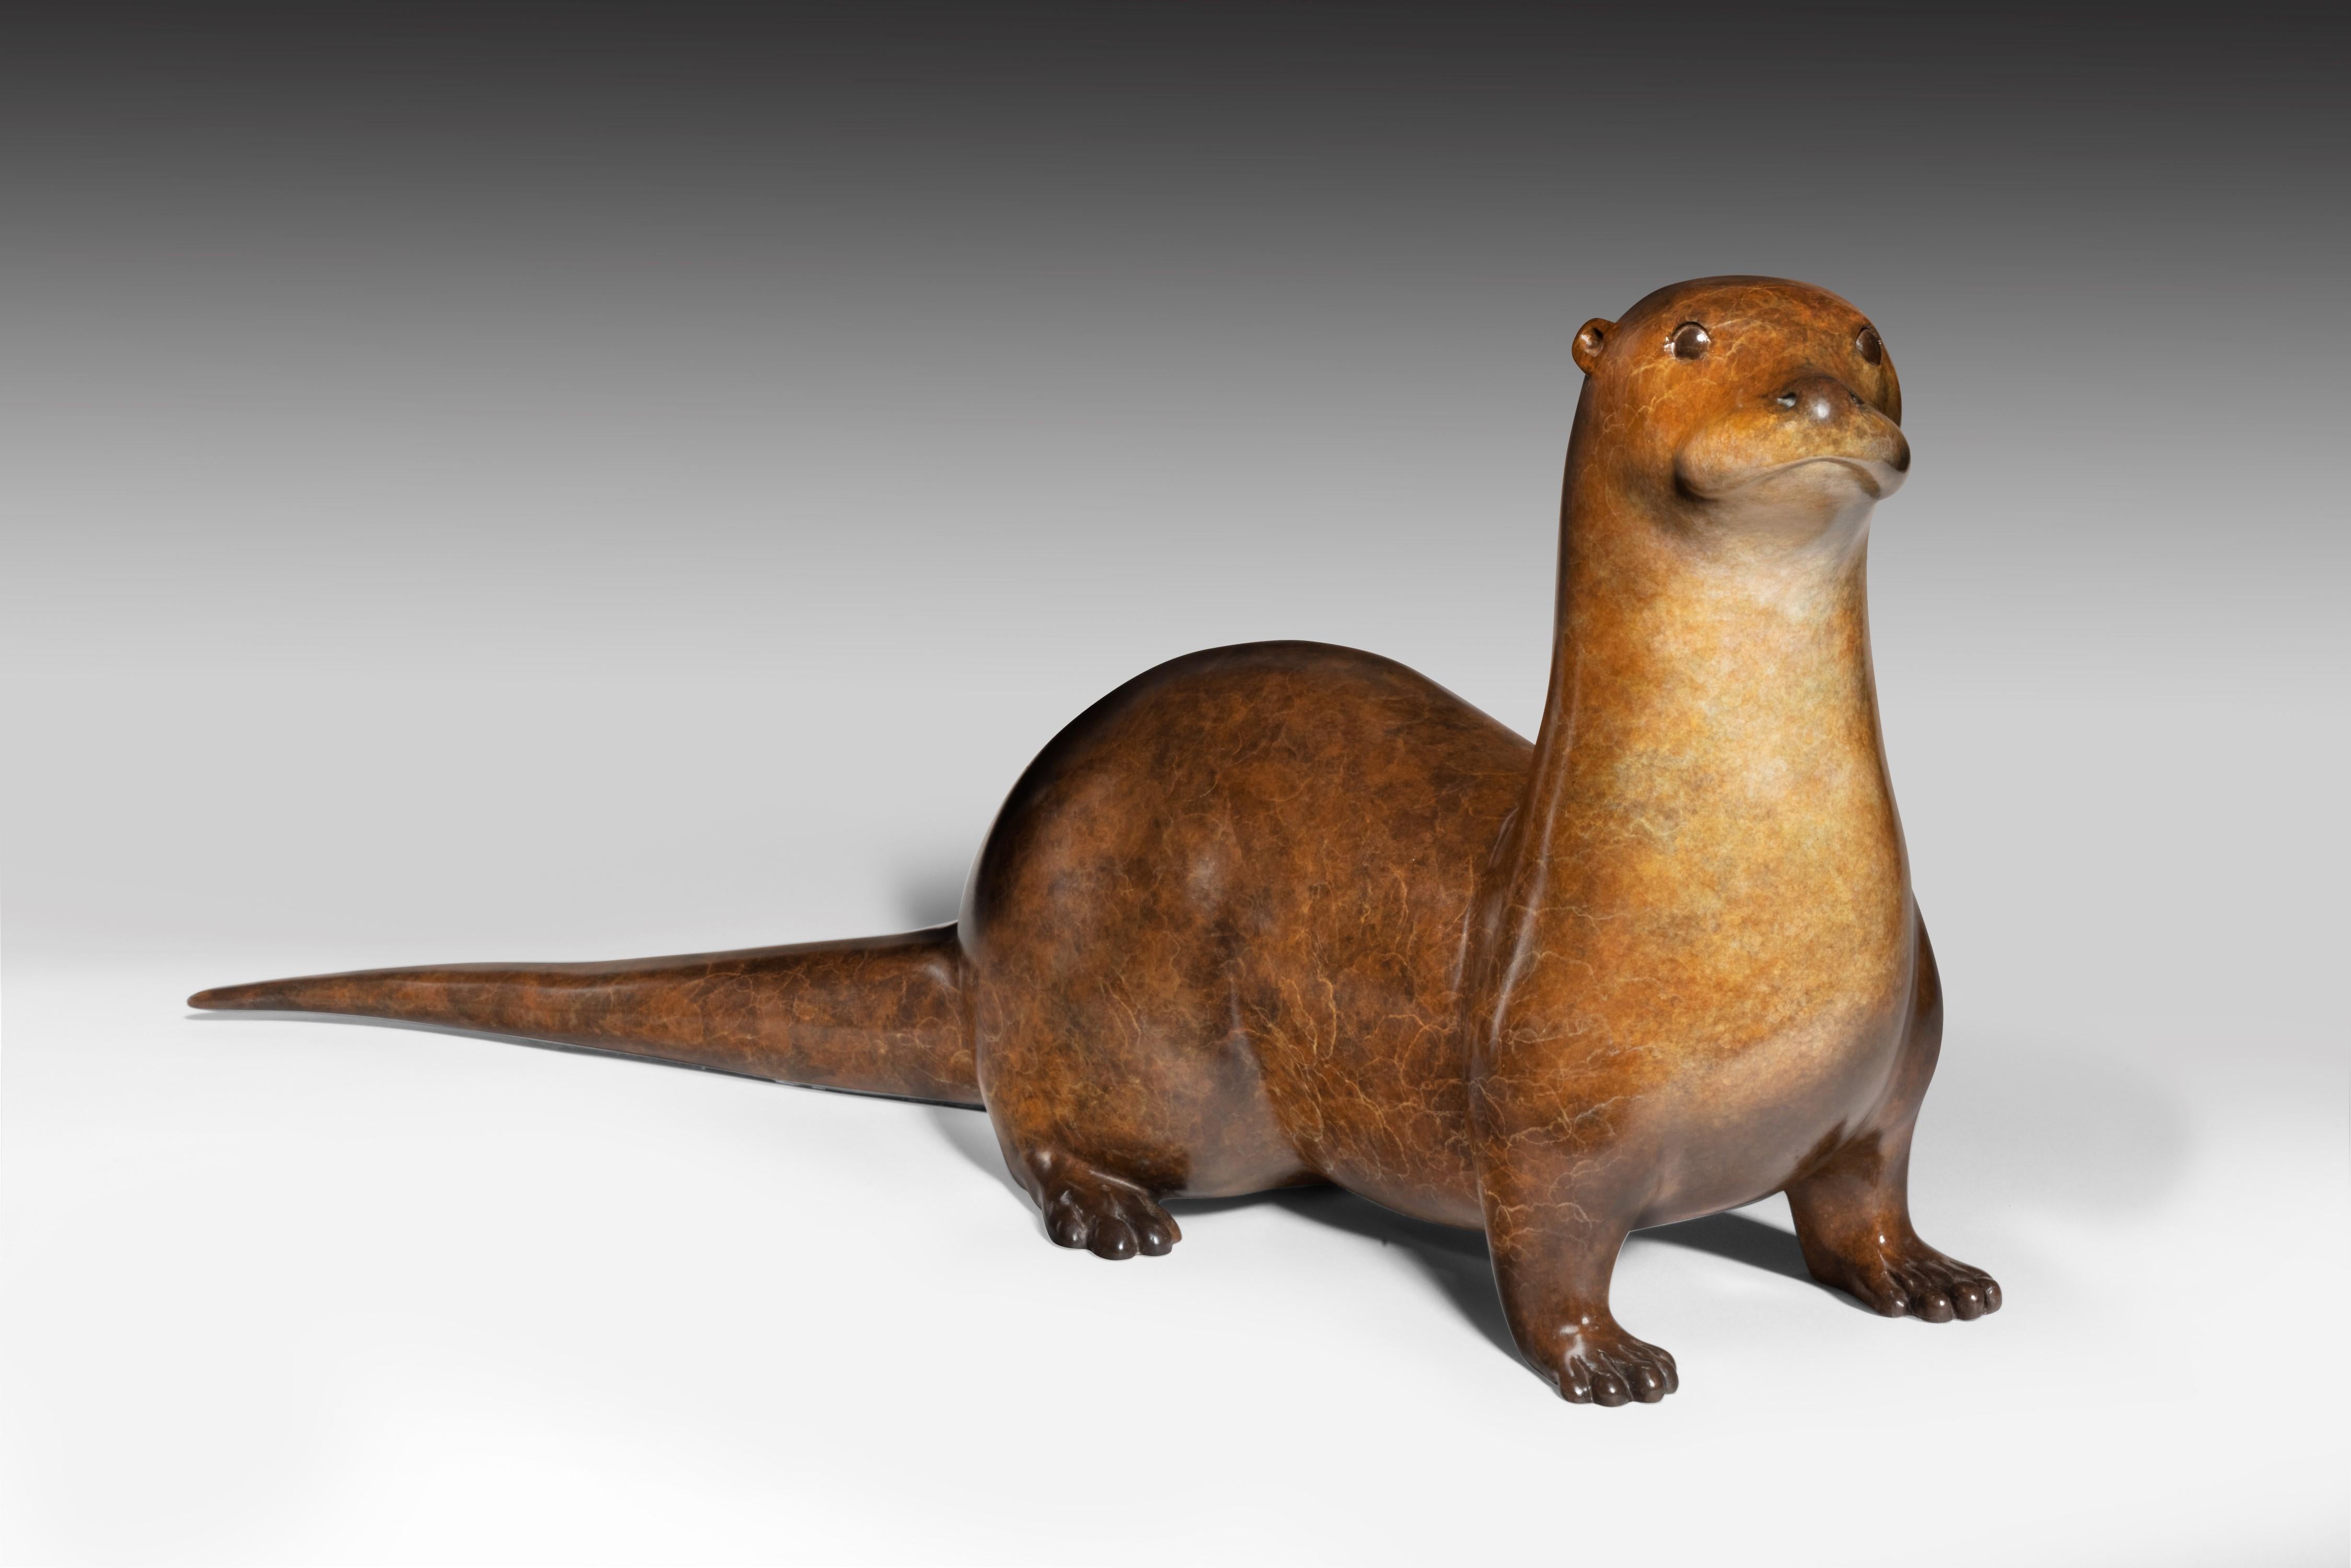 Richard Smith b.1955 Figurative Sculpture - Original Bronze Wildlife Sculpture 'Pottering Otter' by Richard Smith 